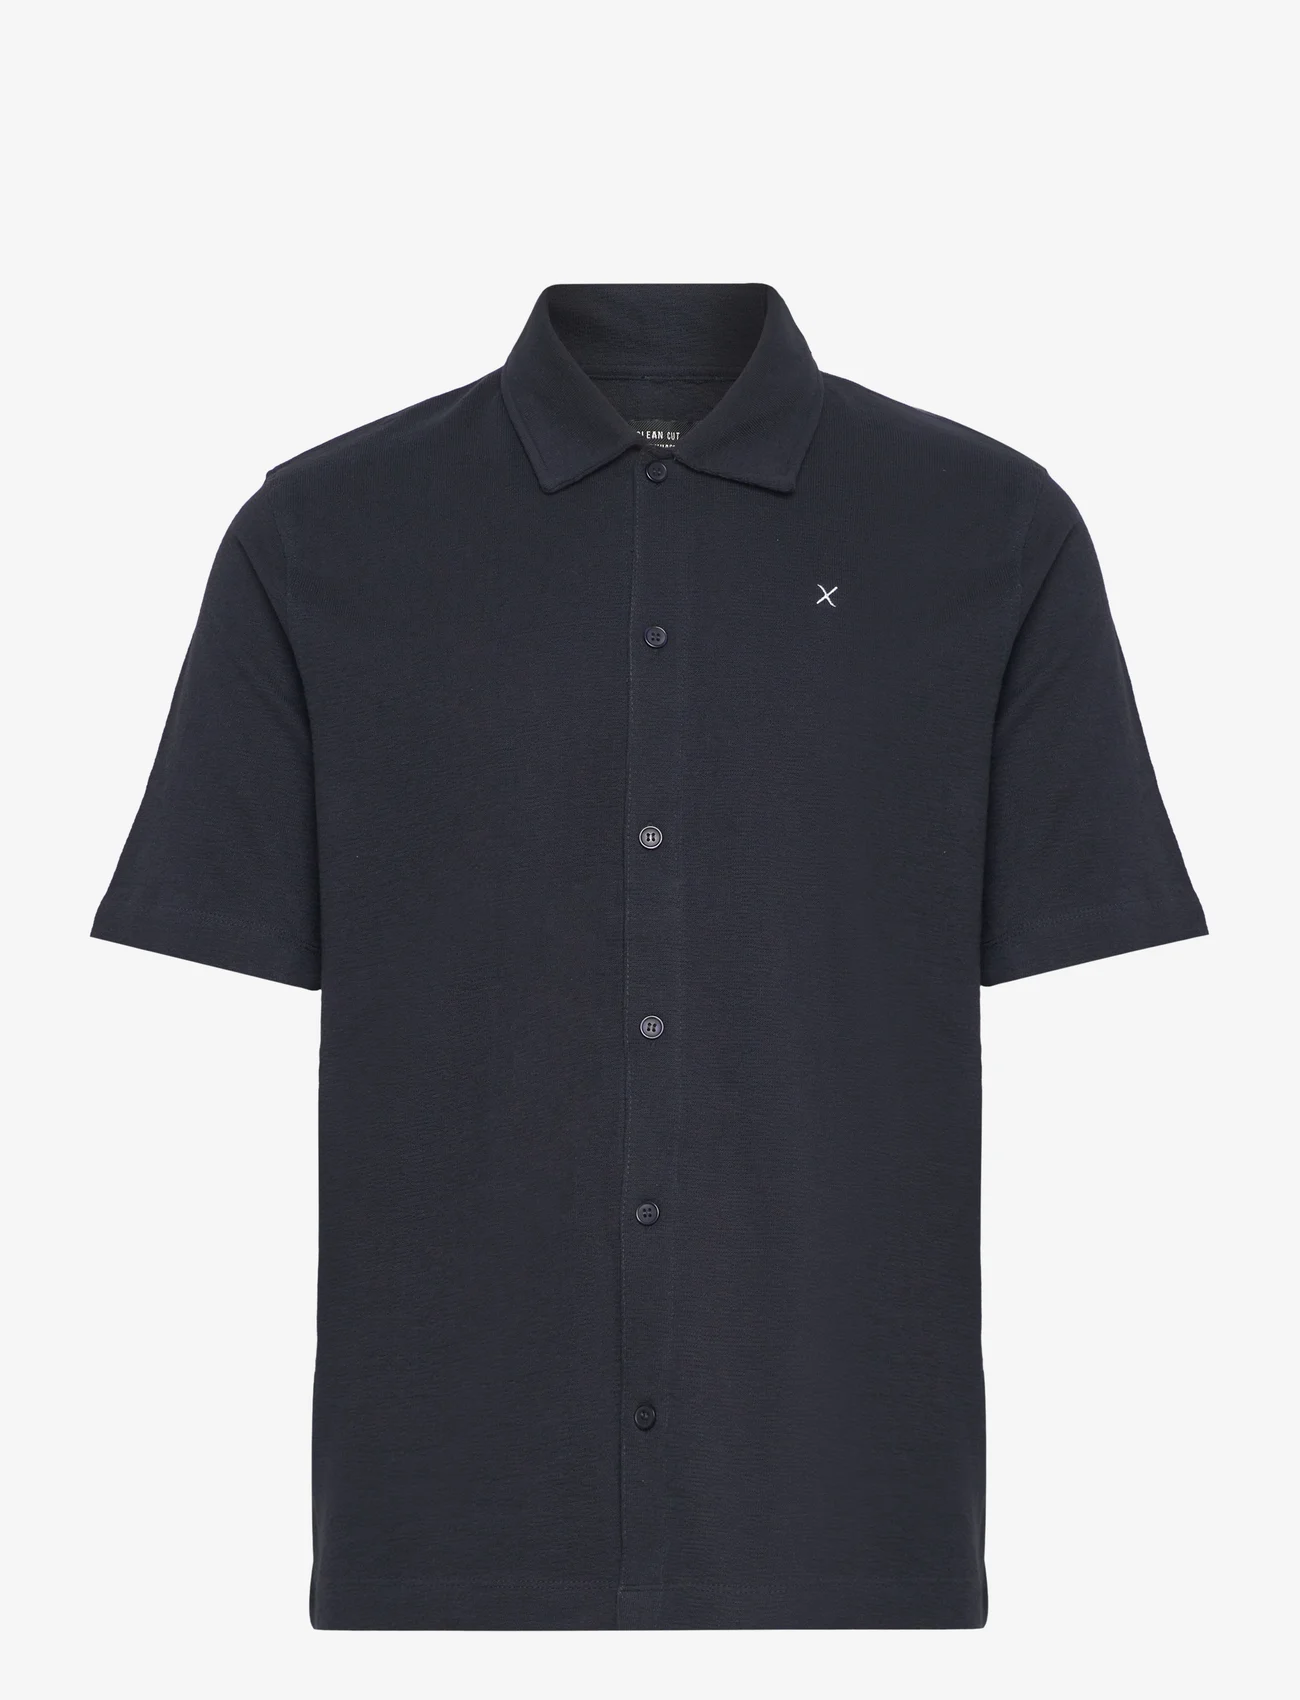 Clean Cut Copenhagen - Calton Structured Shirt S/S - kortärmade pikéer - dark navy - 0